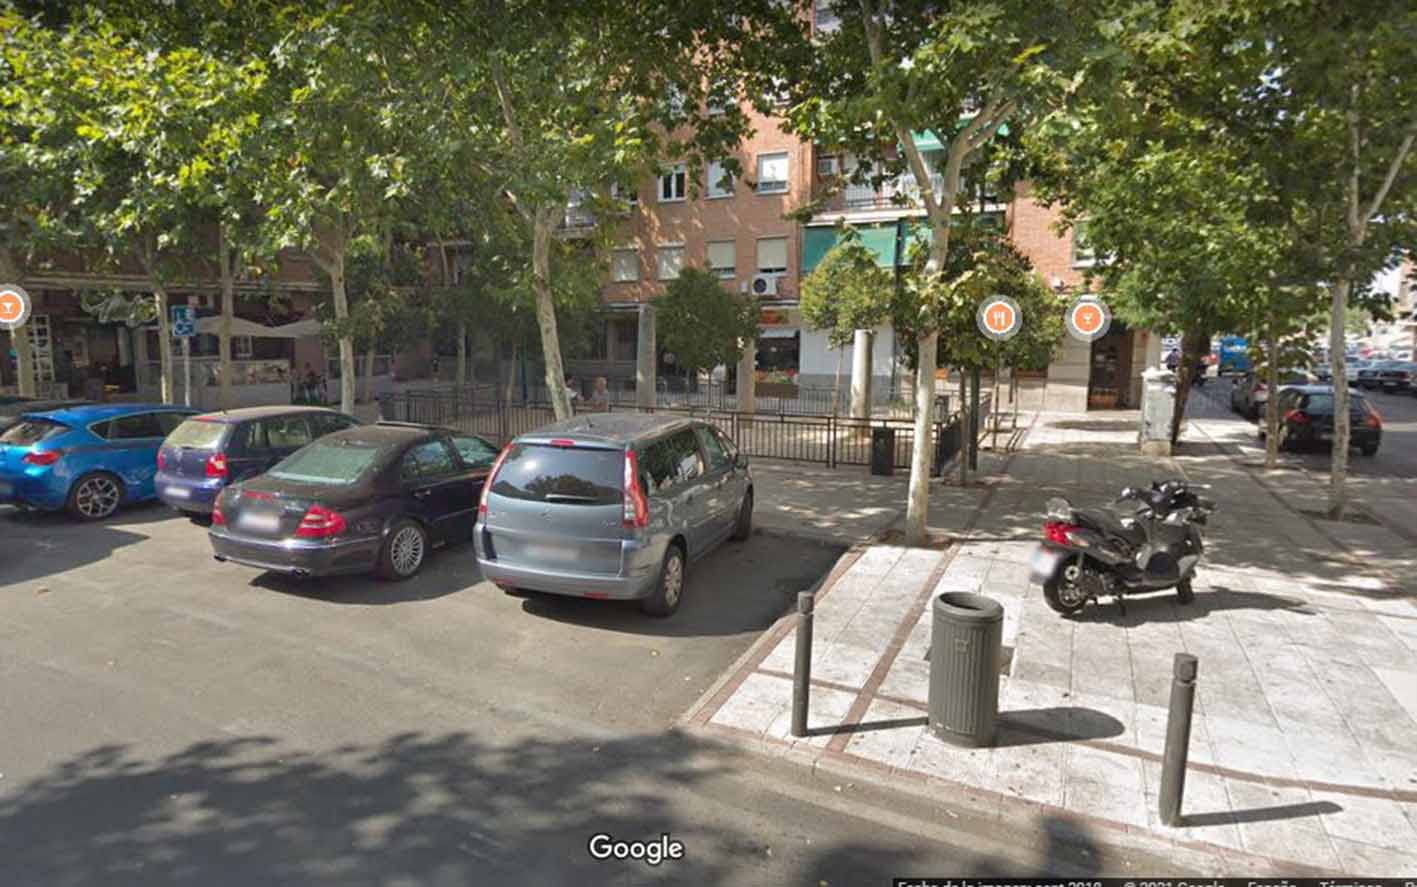 Suceso grave ocurrido a la salida de un pub en la Plaza Cuba de Toledo. Foto: Google Maps.